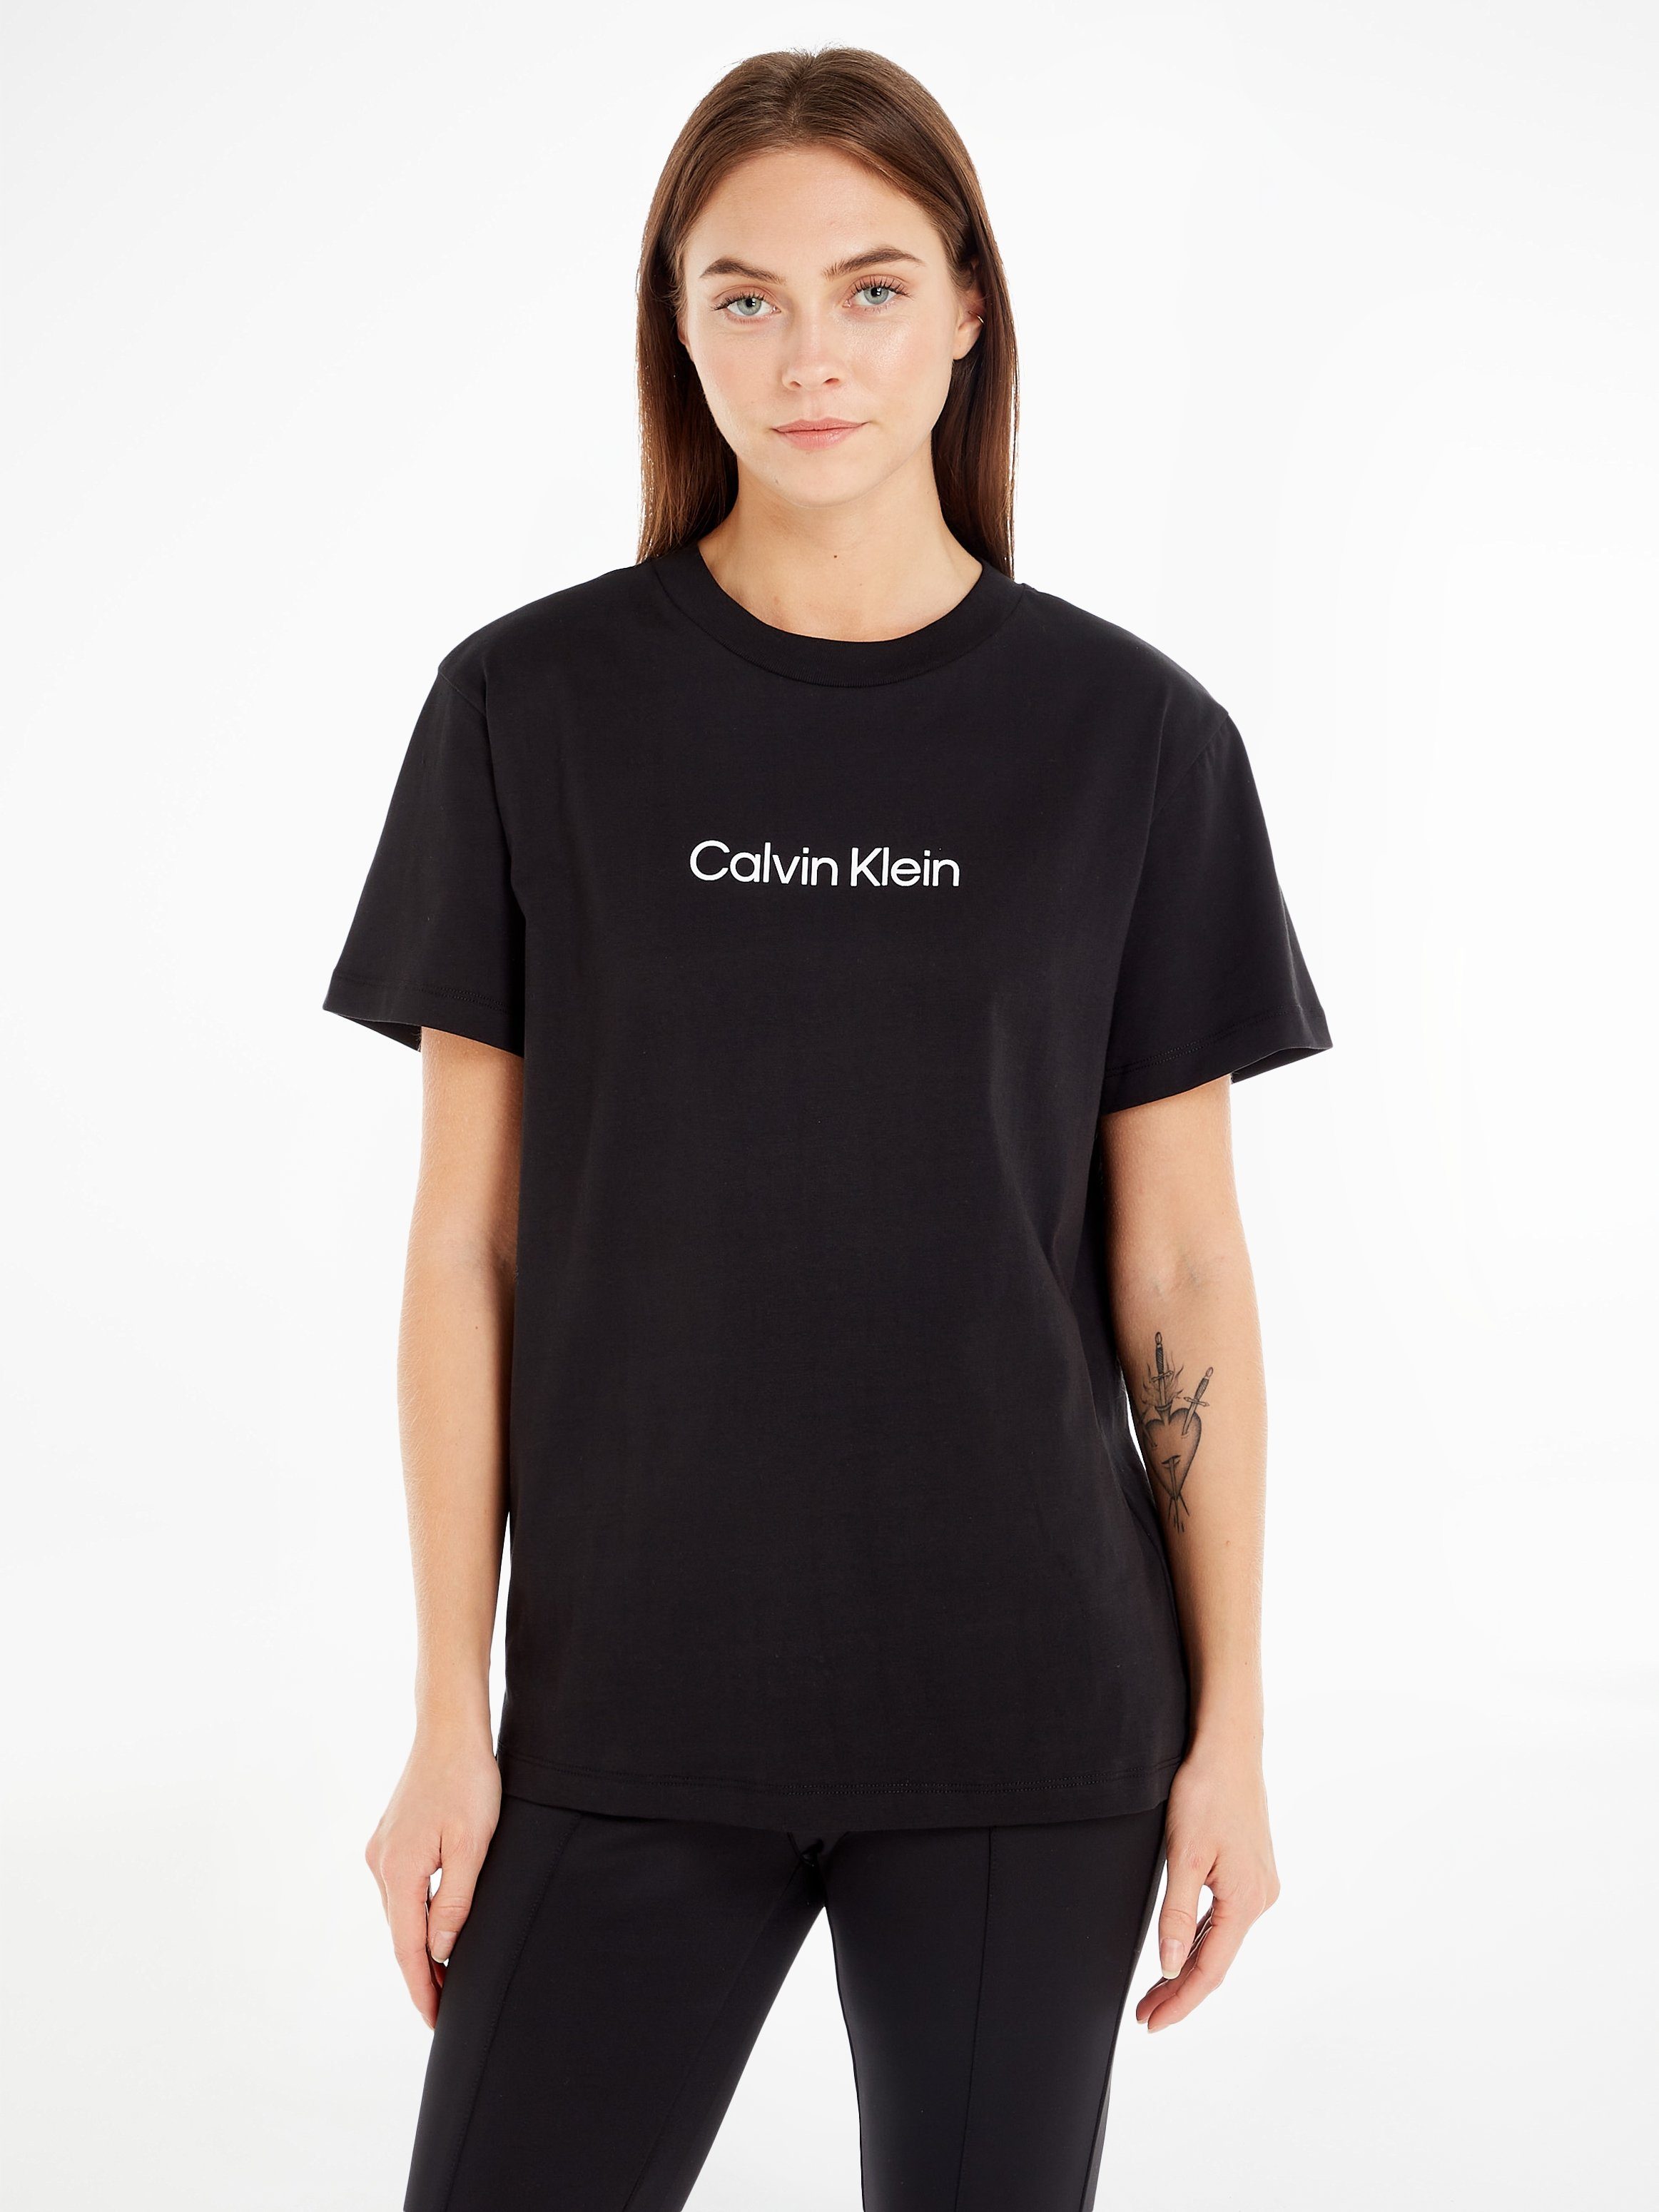 Klein T-Shirt Shirt Calvin HERO REGULAR LOGO